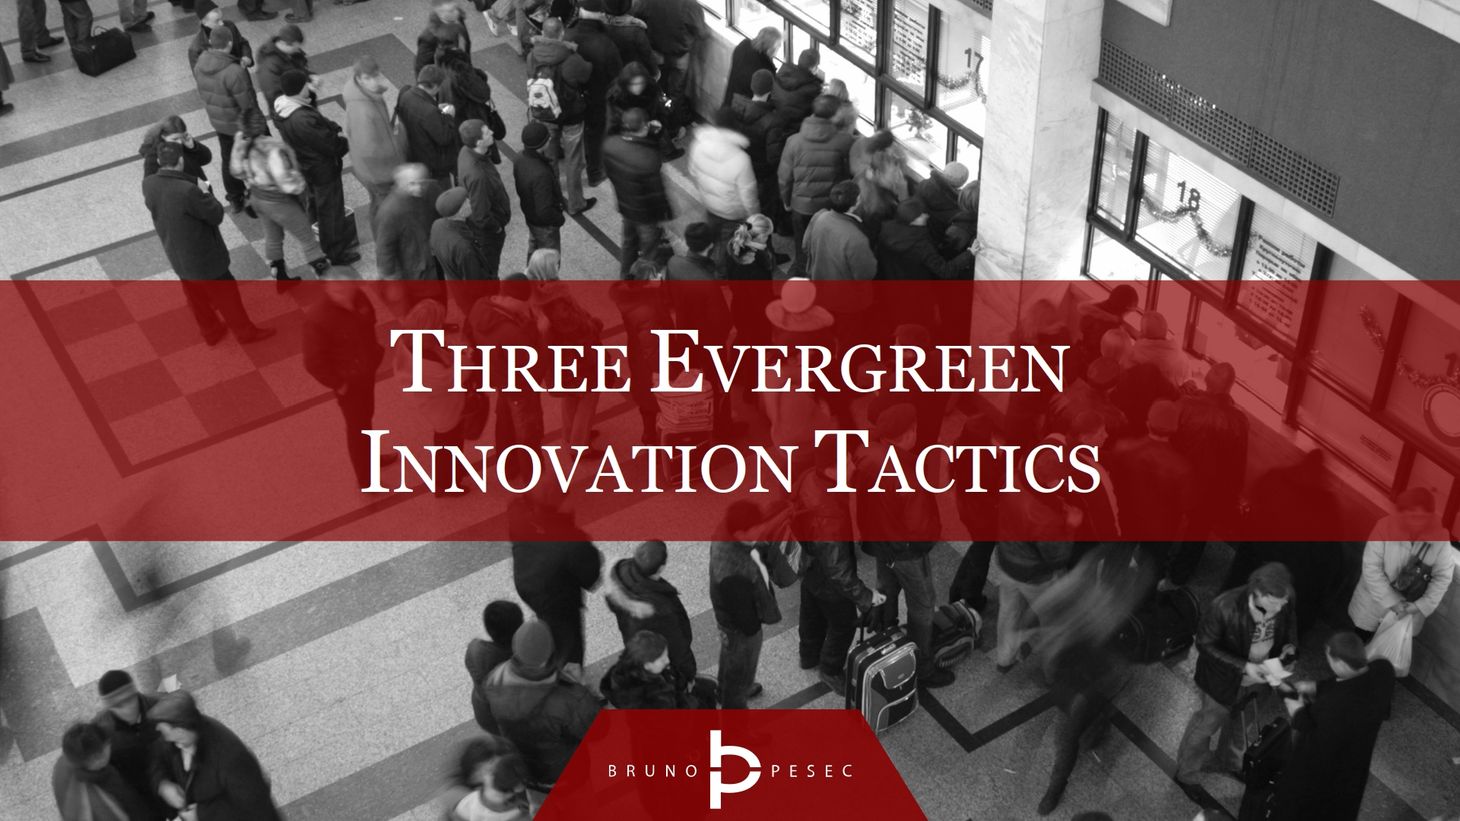 Three evergreen innovation tactics